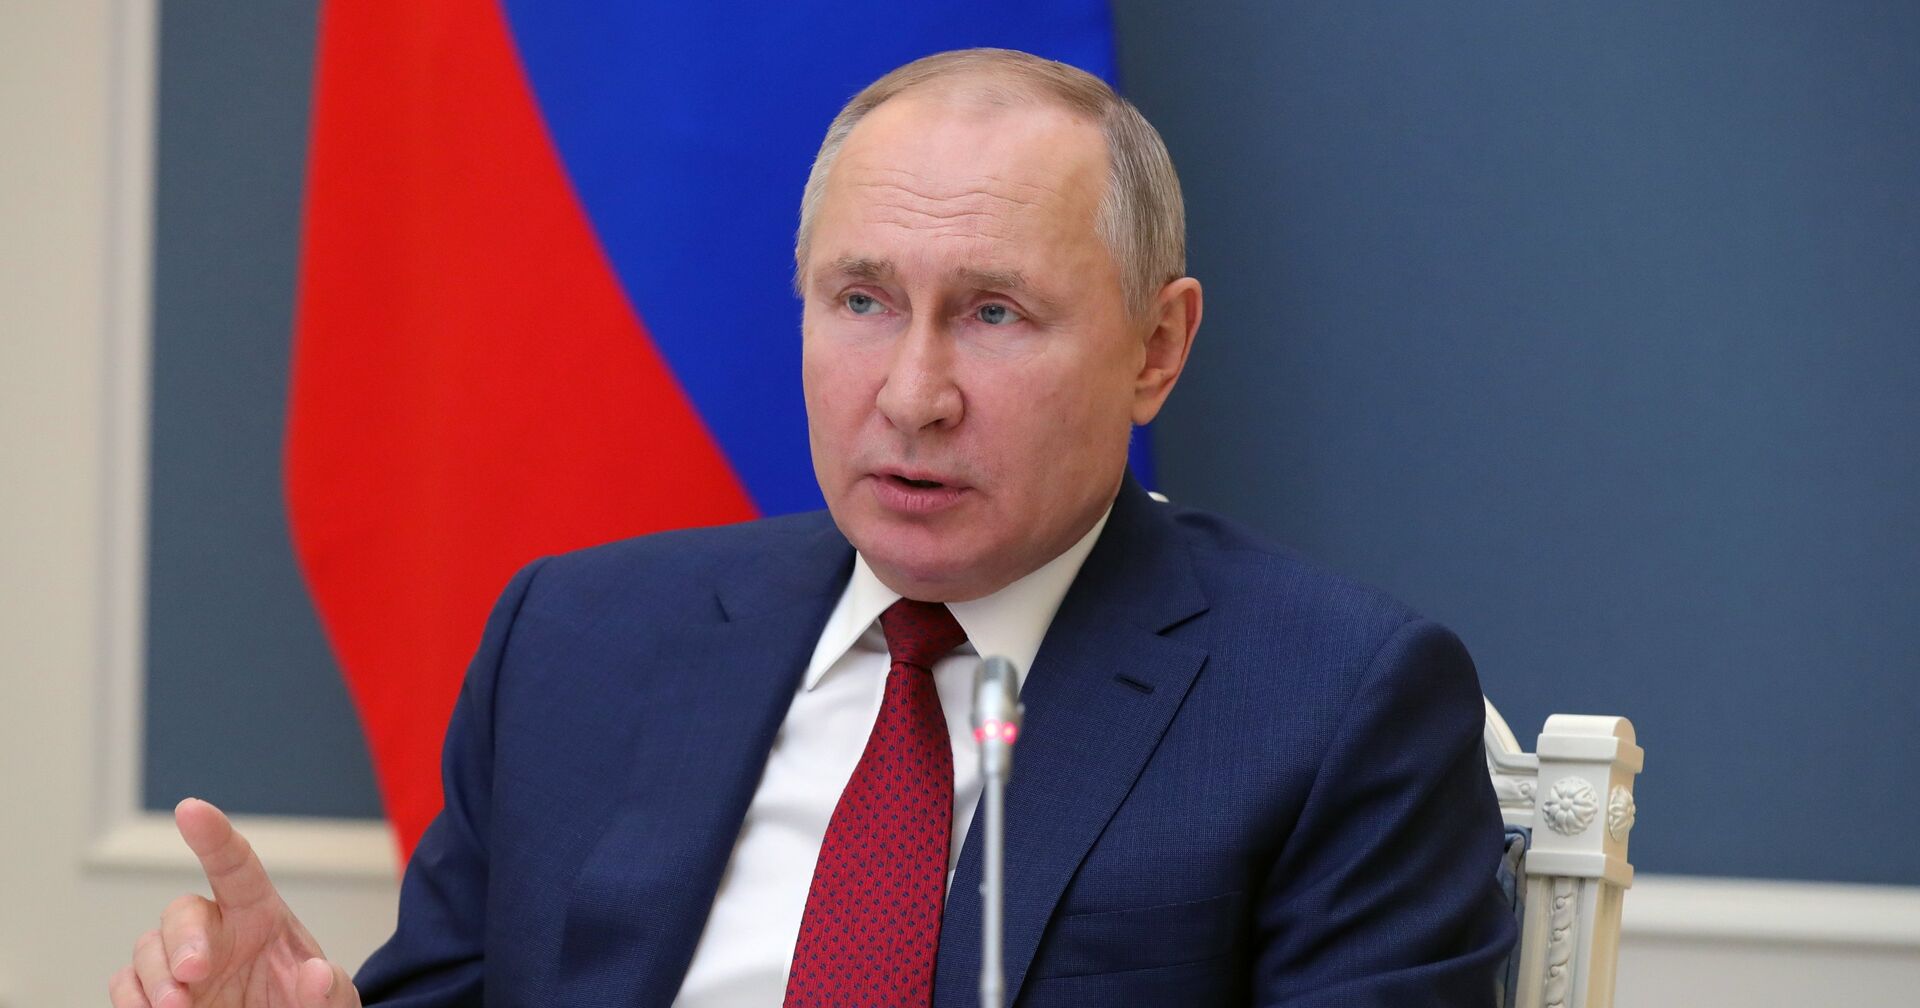 Президент РФ В. Путин выступил на сессии онлайн-форума Давосская повестка дня 2021 - ИноСМИ, 1920, 06.10.2021